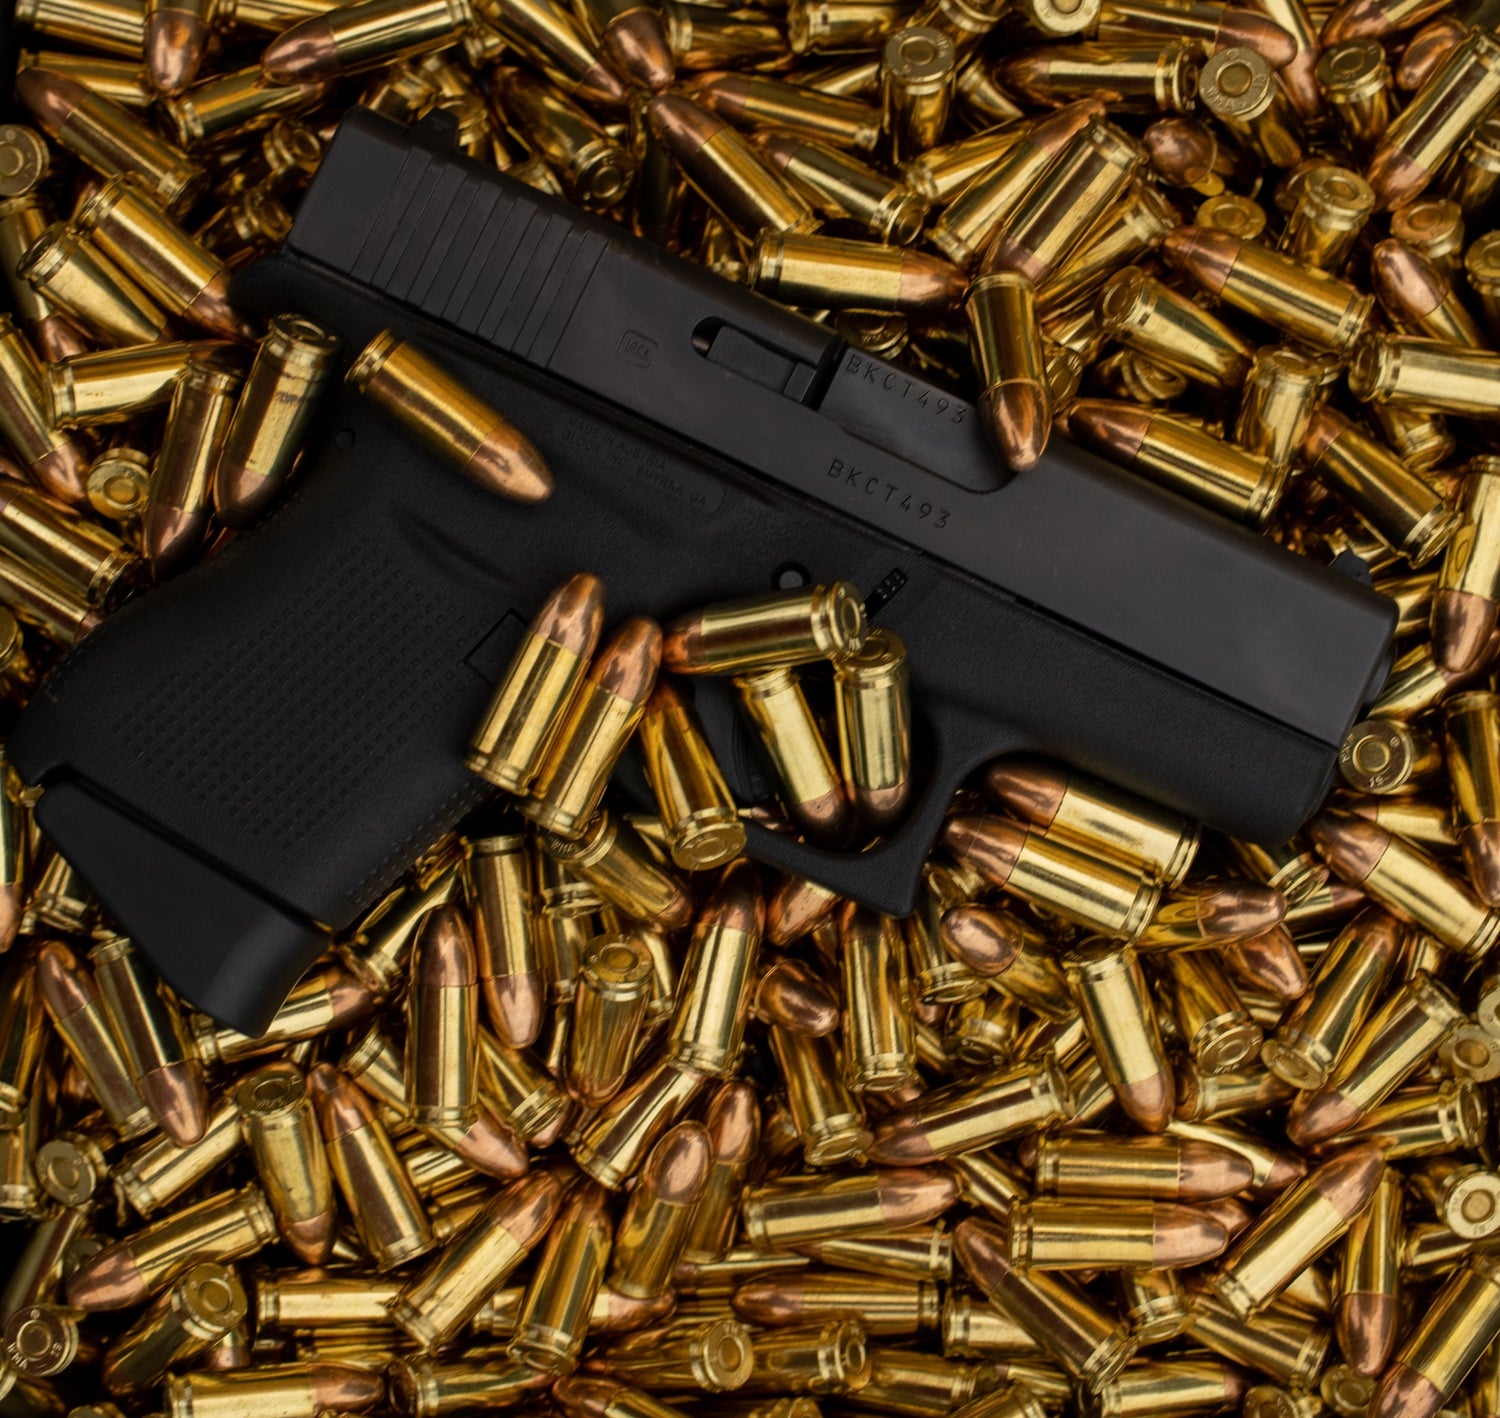 Glock 43 and 9mm ammunition